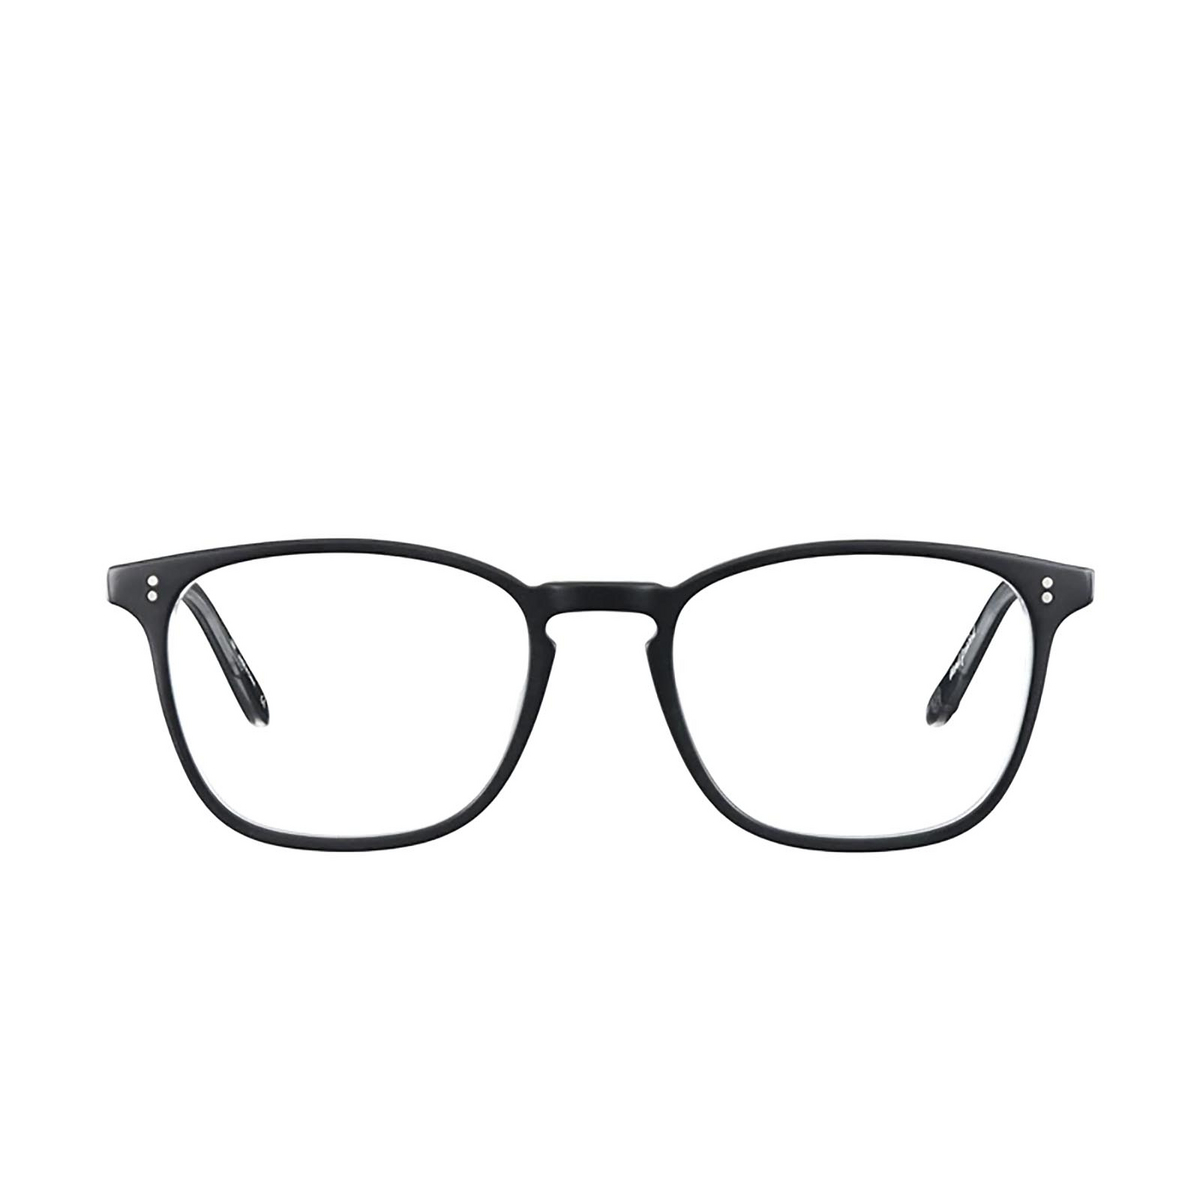 Garrett Leight BOON Eyeglasses MBK Matte Black - front view